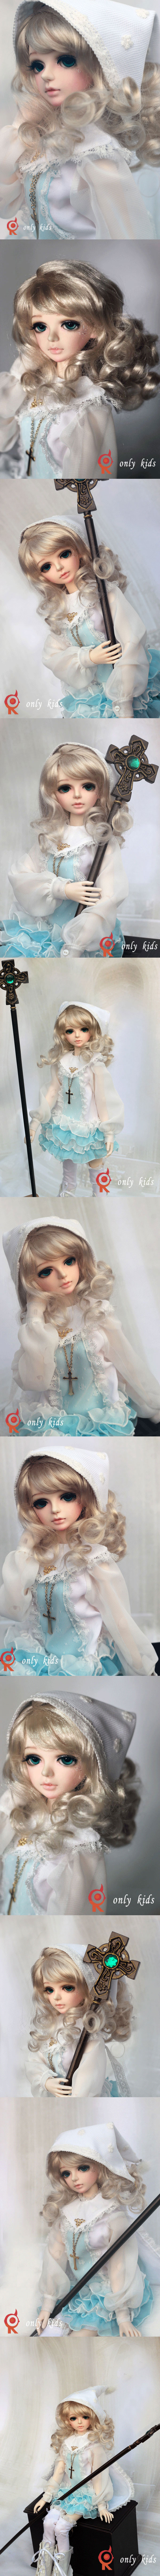 BJD Lan Ling Girl 44cm Boll-jointed doll